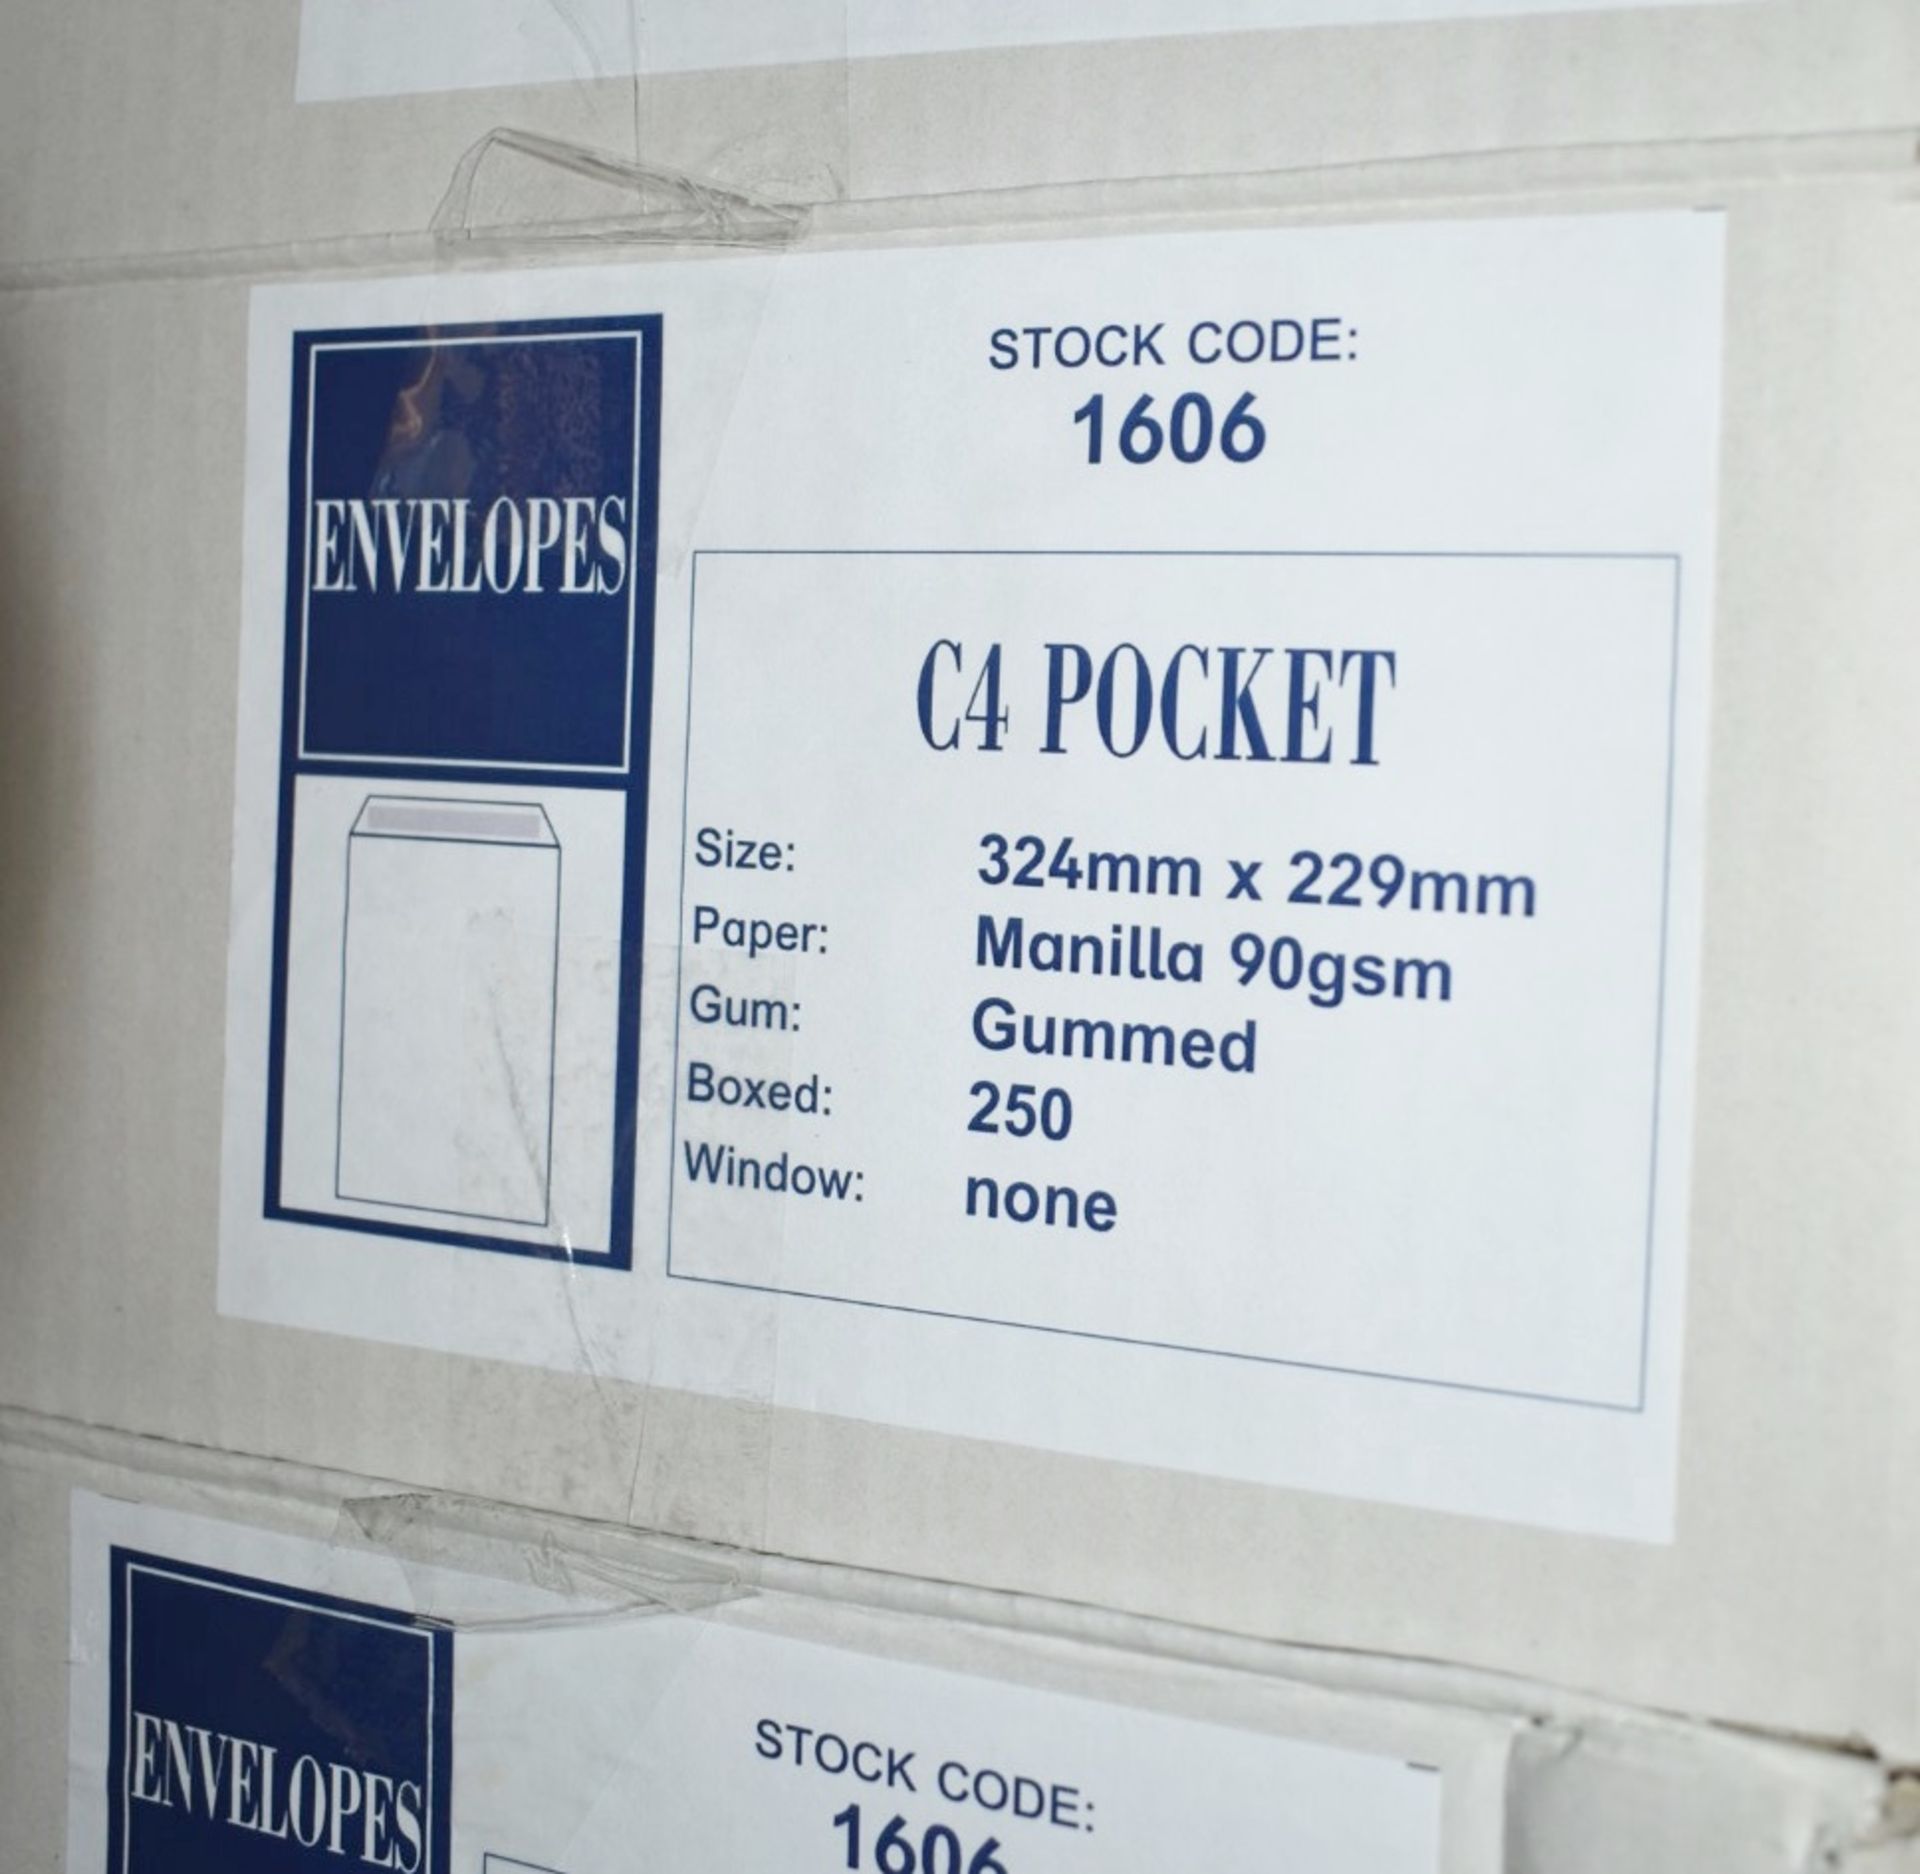 84 x Boxes Of 'C4 Pocket' Manilla  Gummed Envelopes - 324x229mm / 90gsm - Brand New Stock - Ref - Image 2 of 3